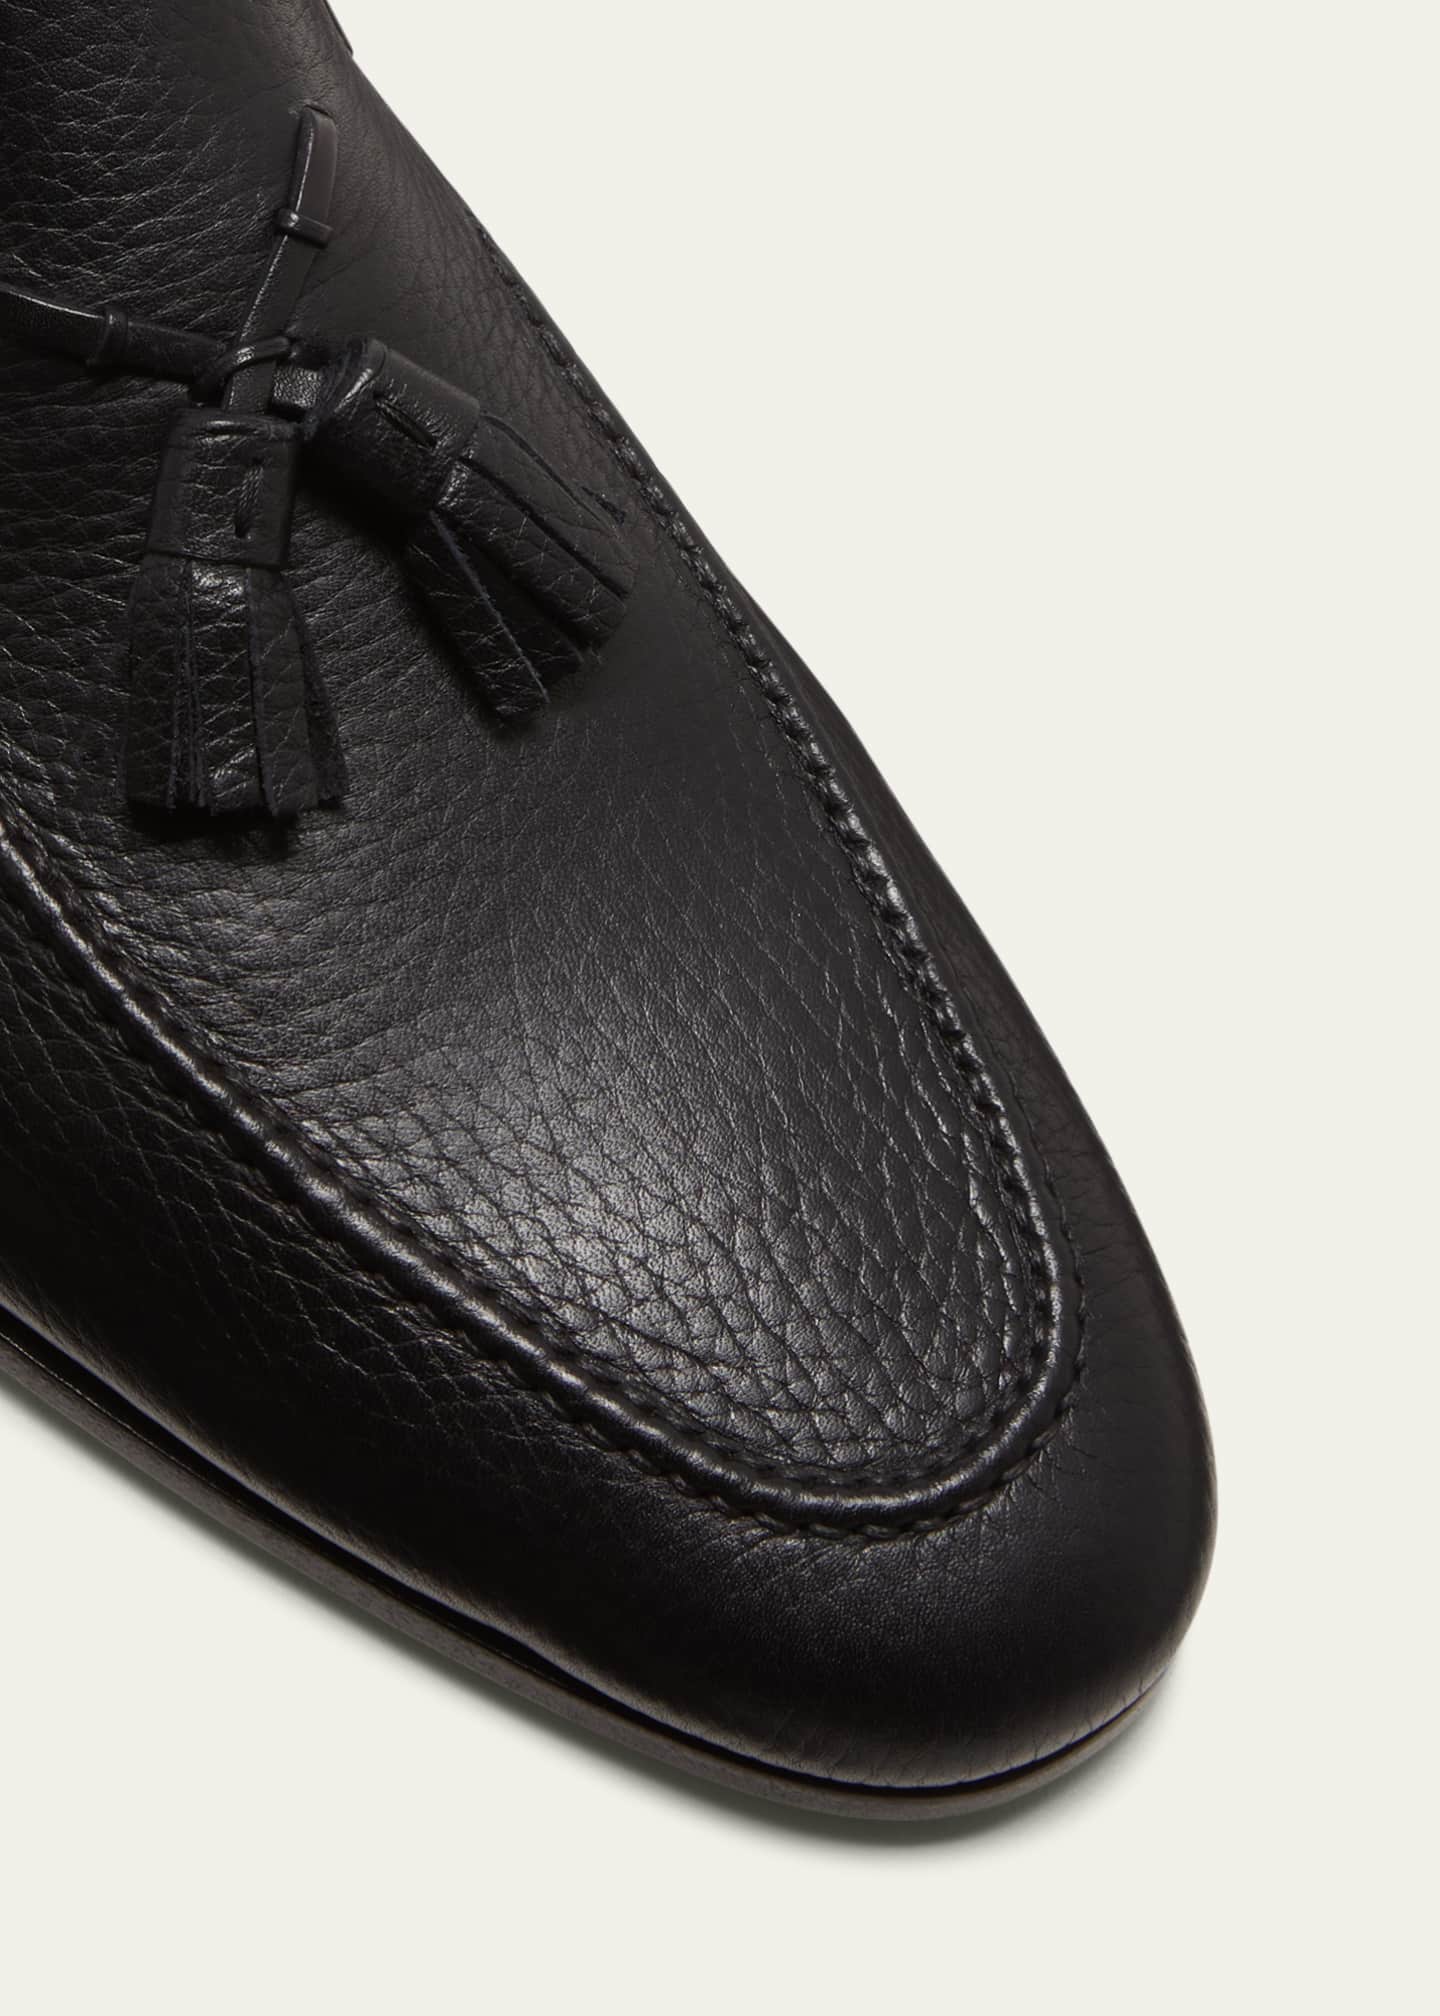 Magnanni Men's Seneca Grained Leather Tassel Loafers - Bergdorf Goodman